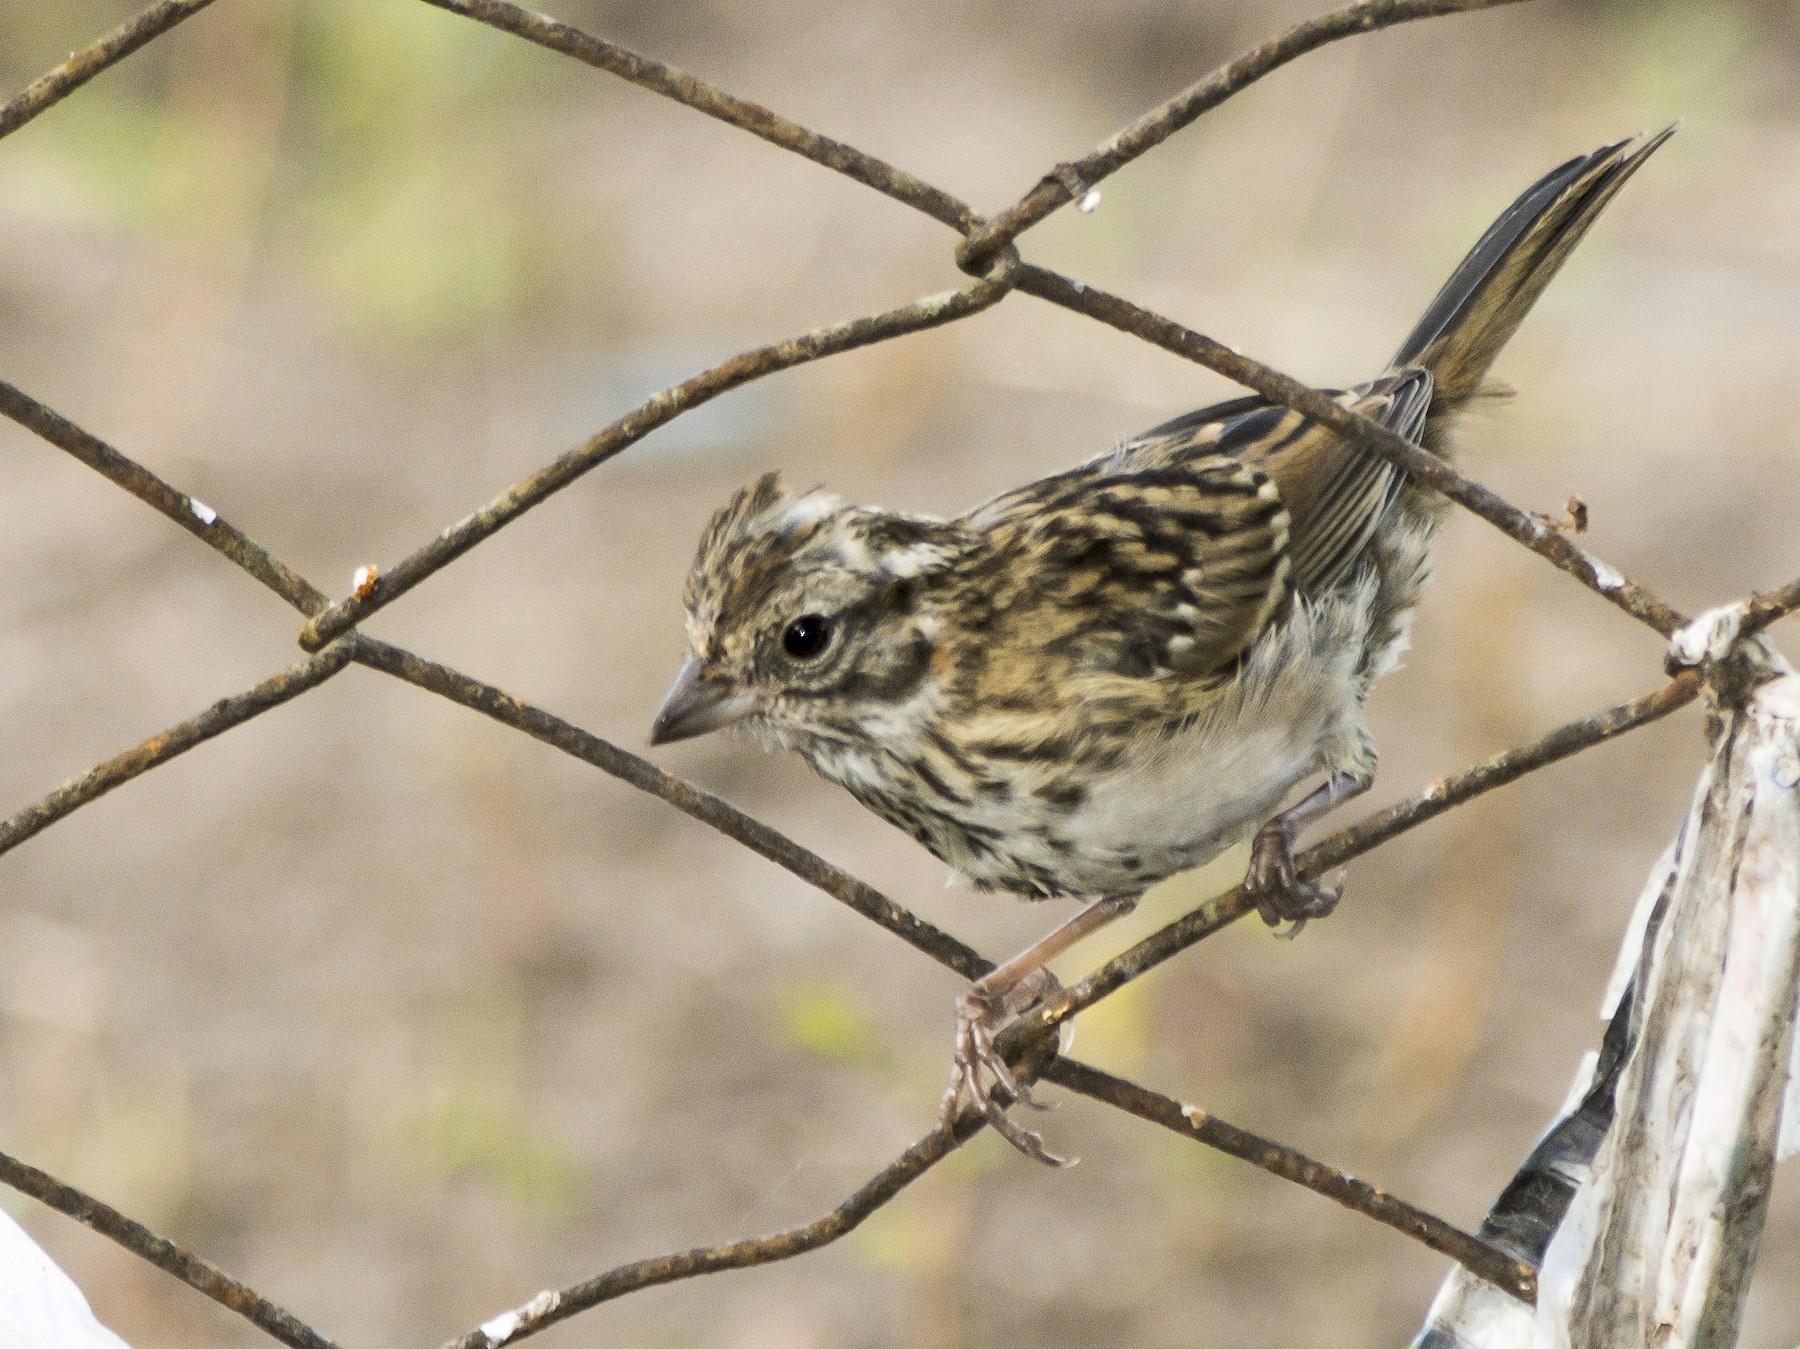 Rufous-collared Sparrow - Eduardo Battaglini